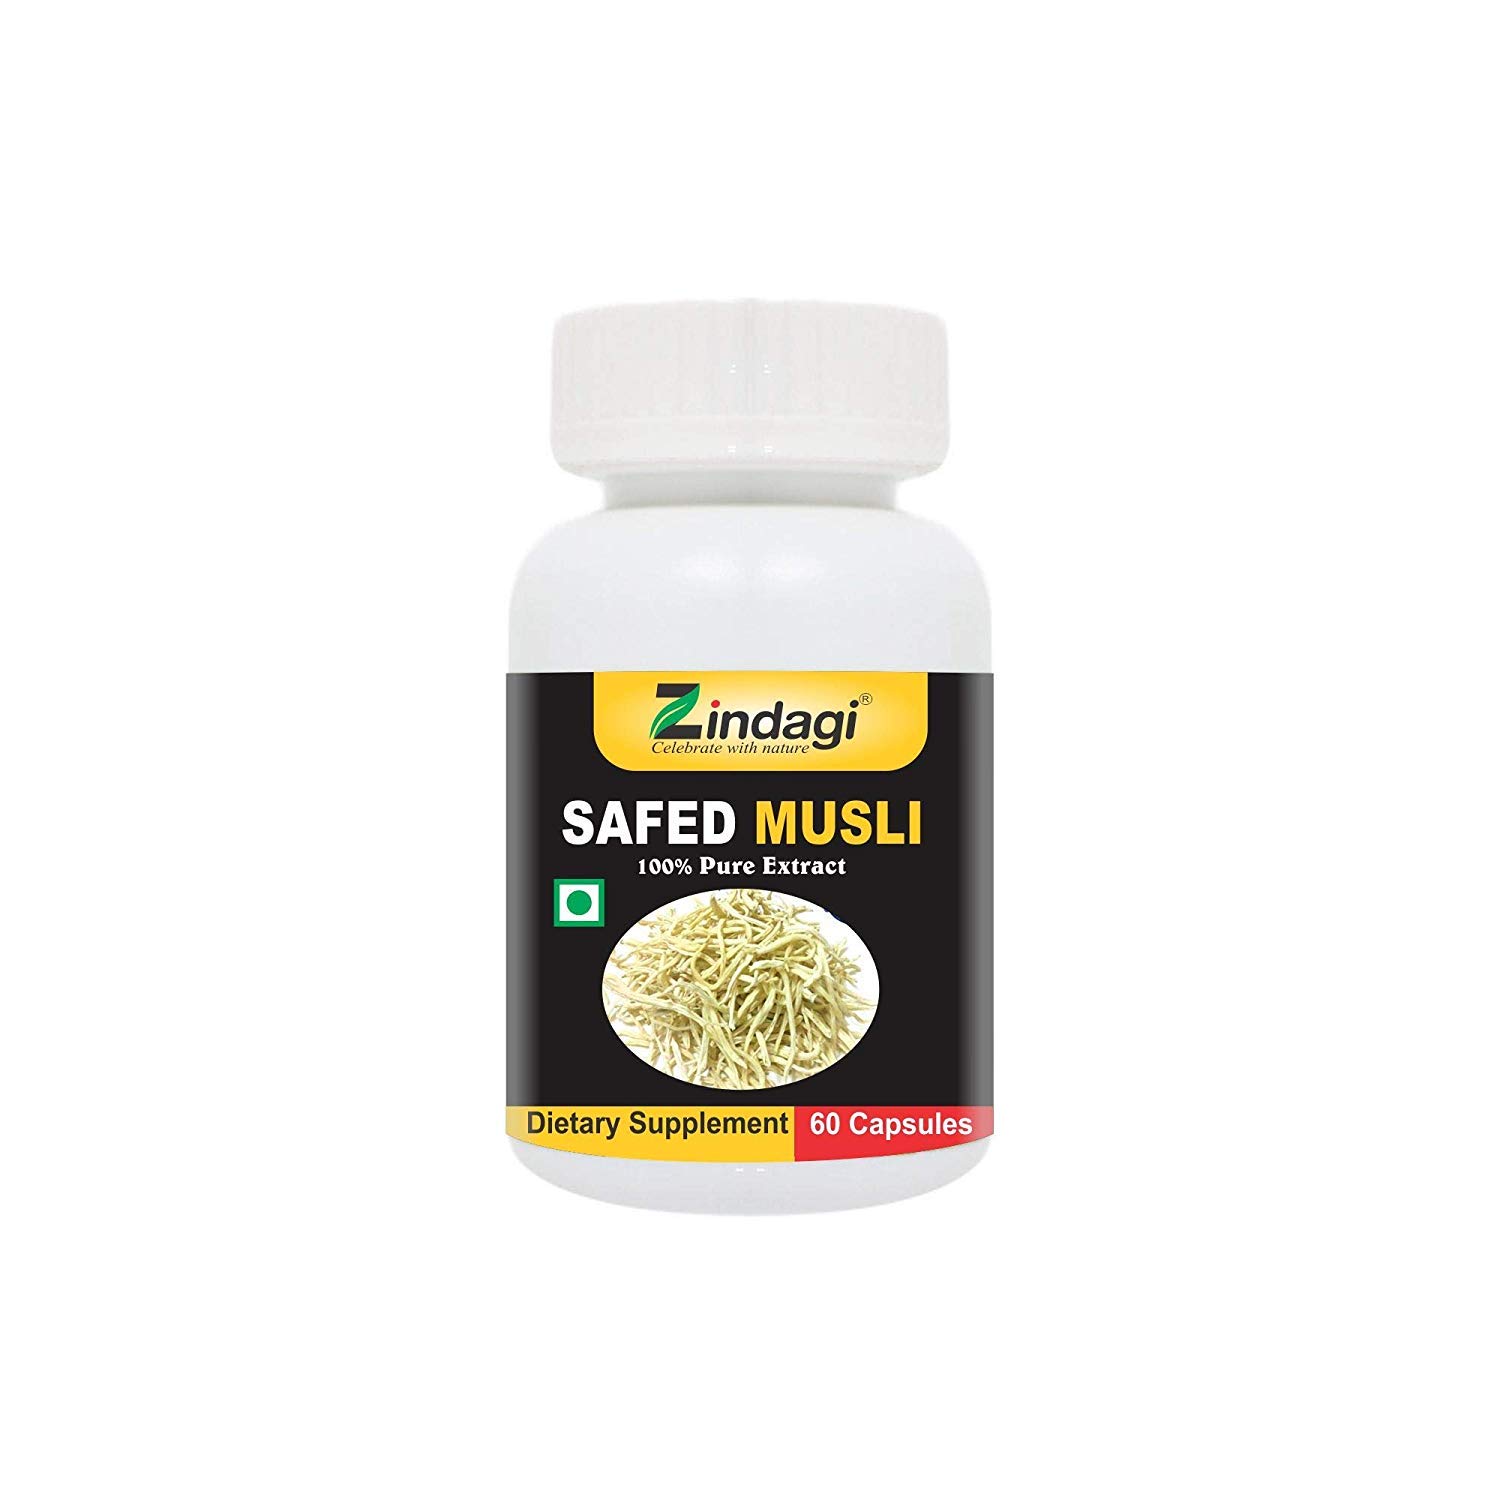 Buy Zindagi Safed Musli Pure Extract Capsules - Improves Strength & Stamina (60 Capsules) at Best Price Online